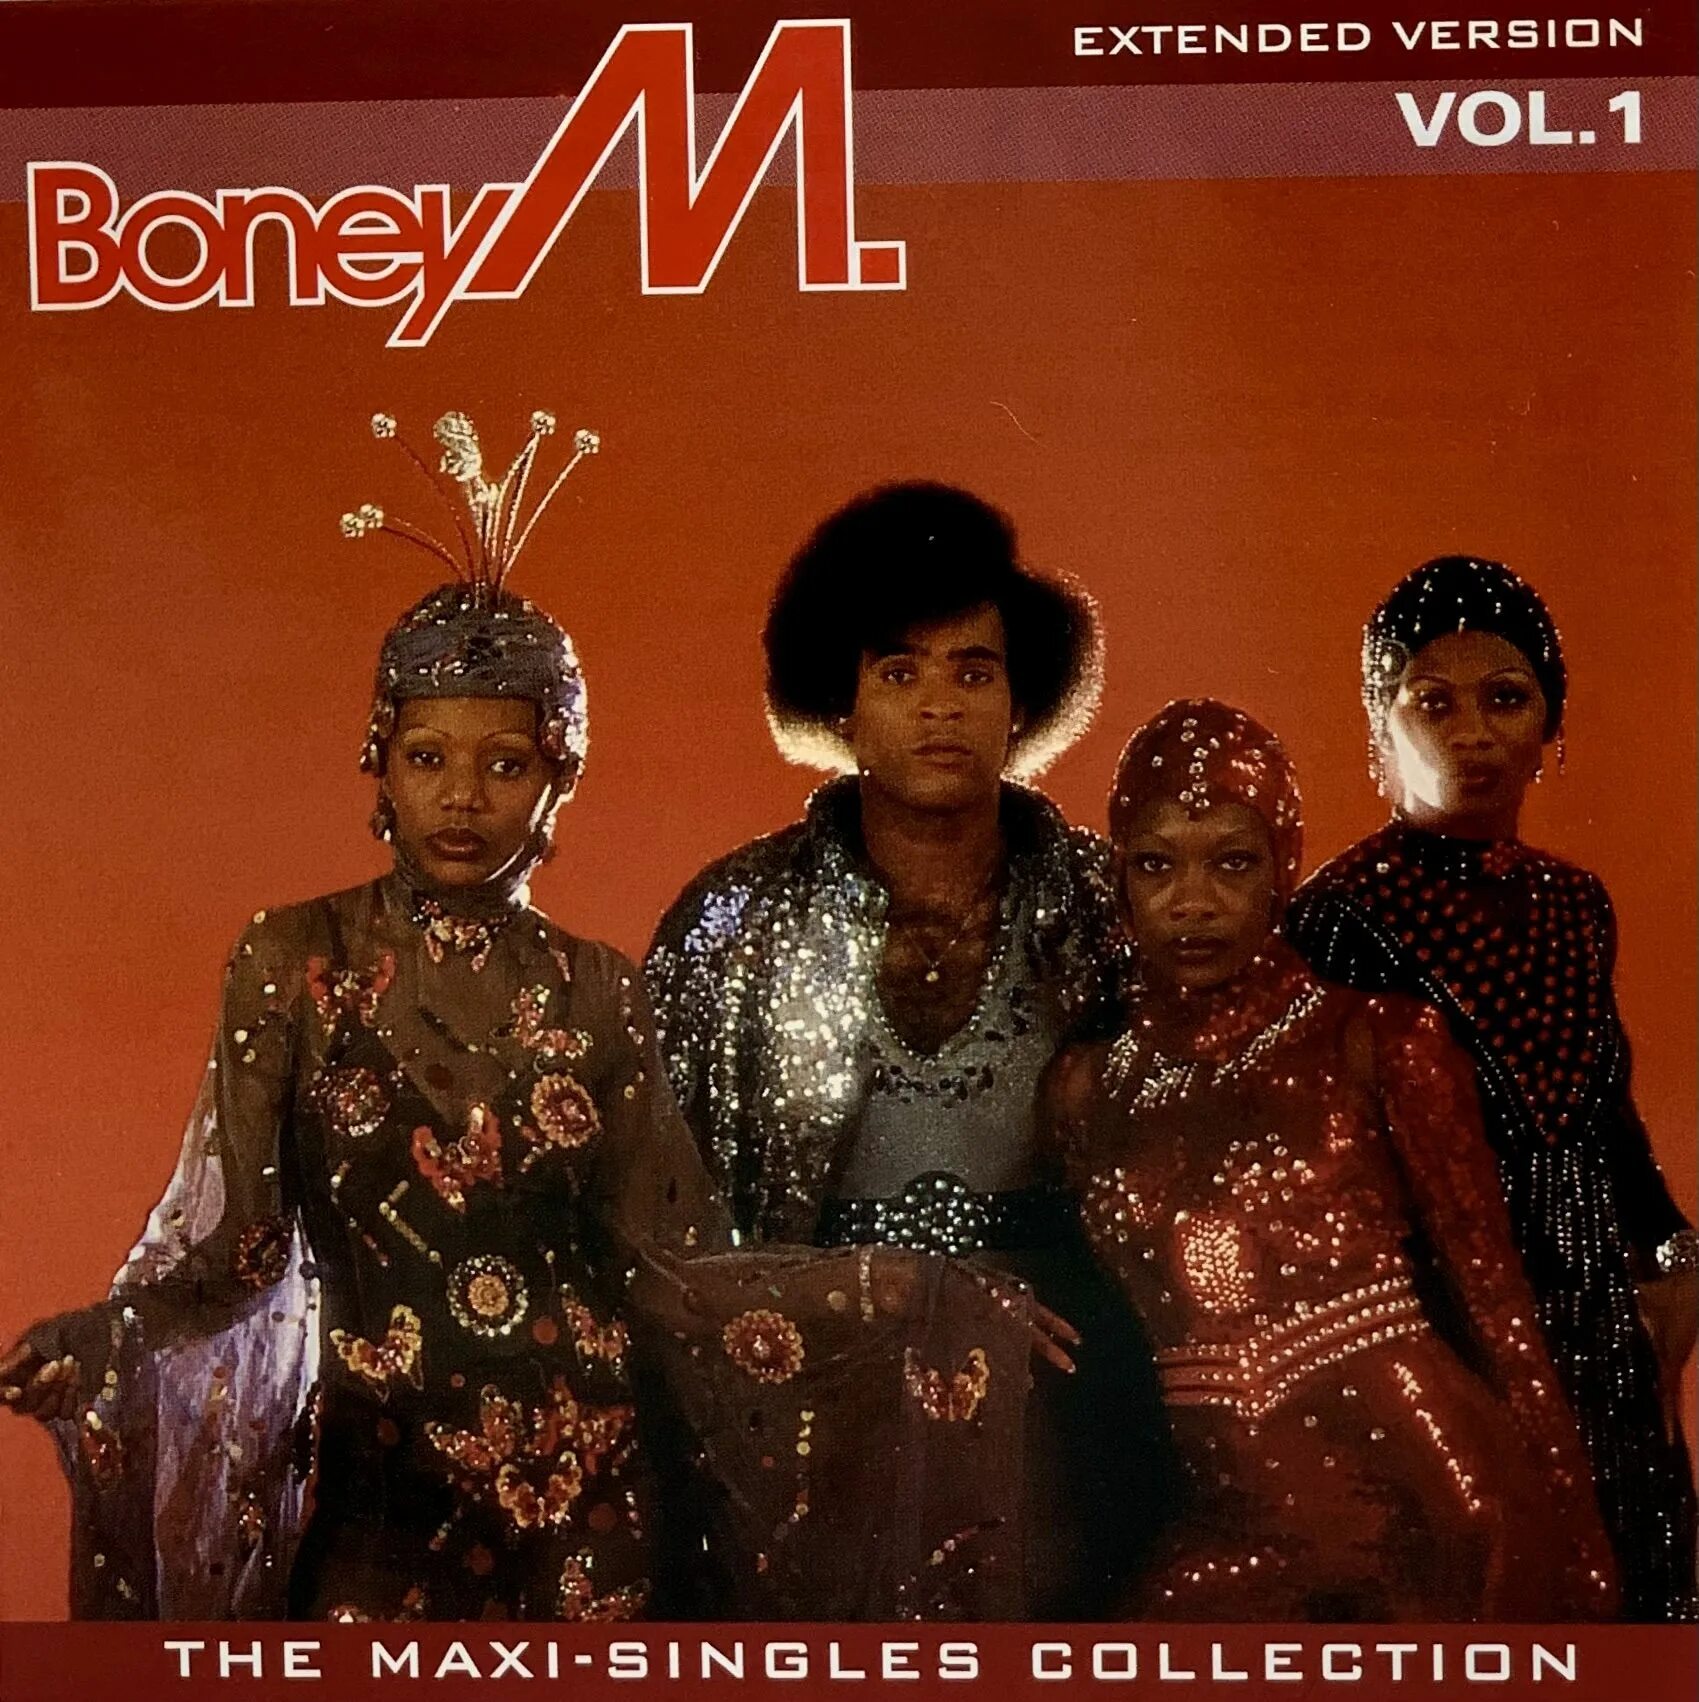 Collection 2005. Boney m Maxi-Single CD. CD Boney m. the Maxi-Singles collection Volume 3. Boney m Singles collection. Boney m обложка.